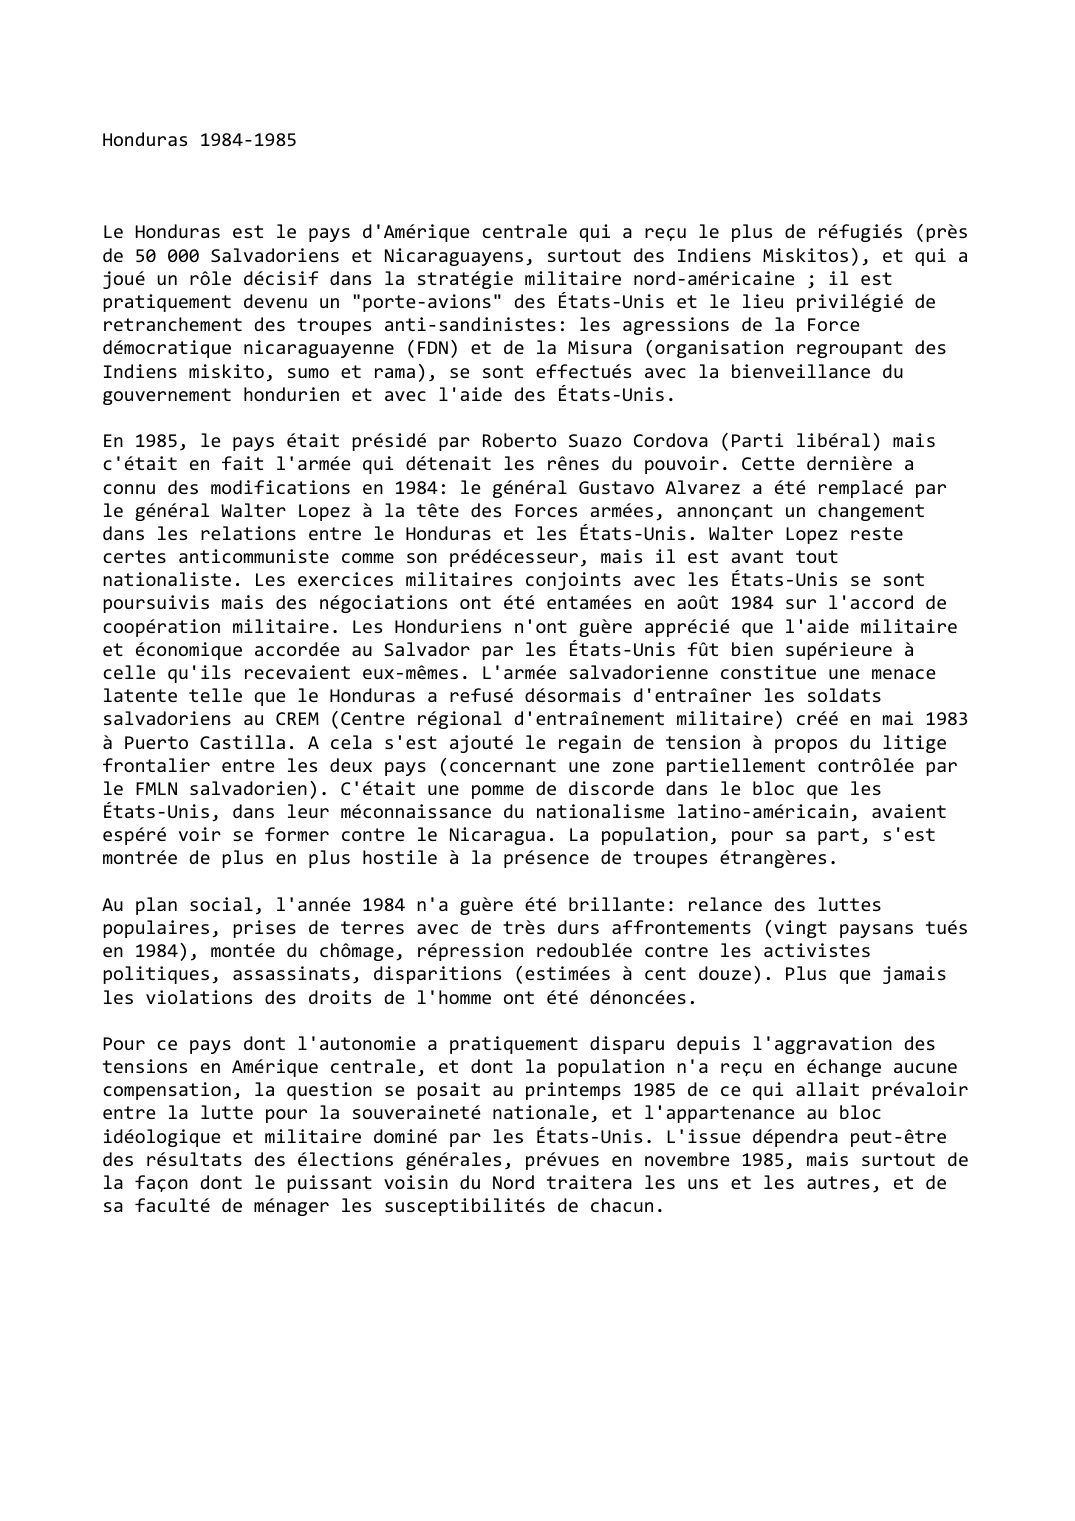 Prévisualisation du document Honduras (1984-1985)